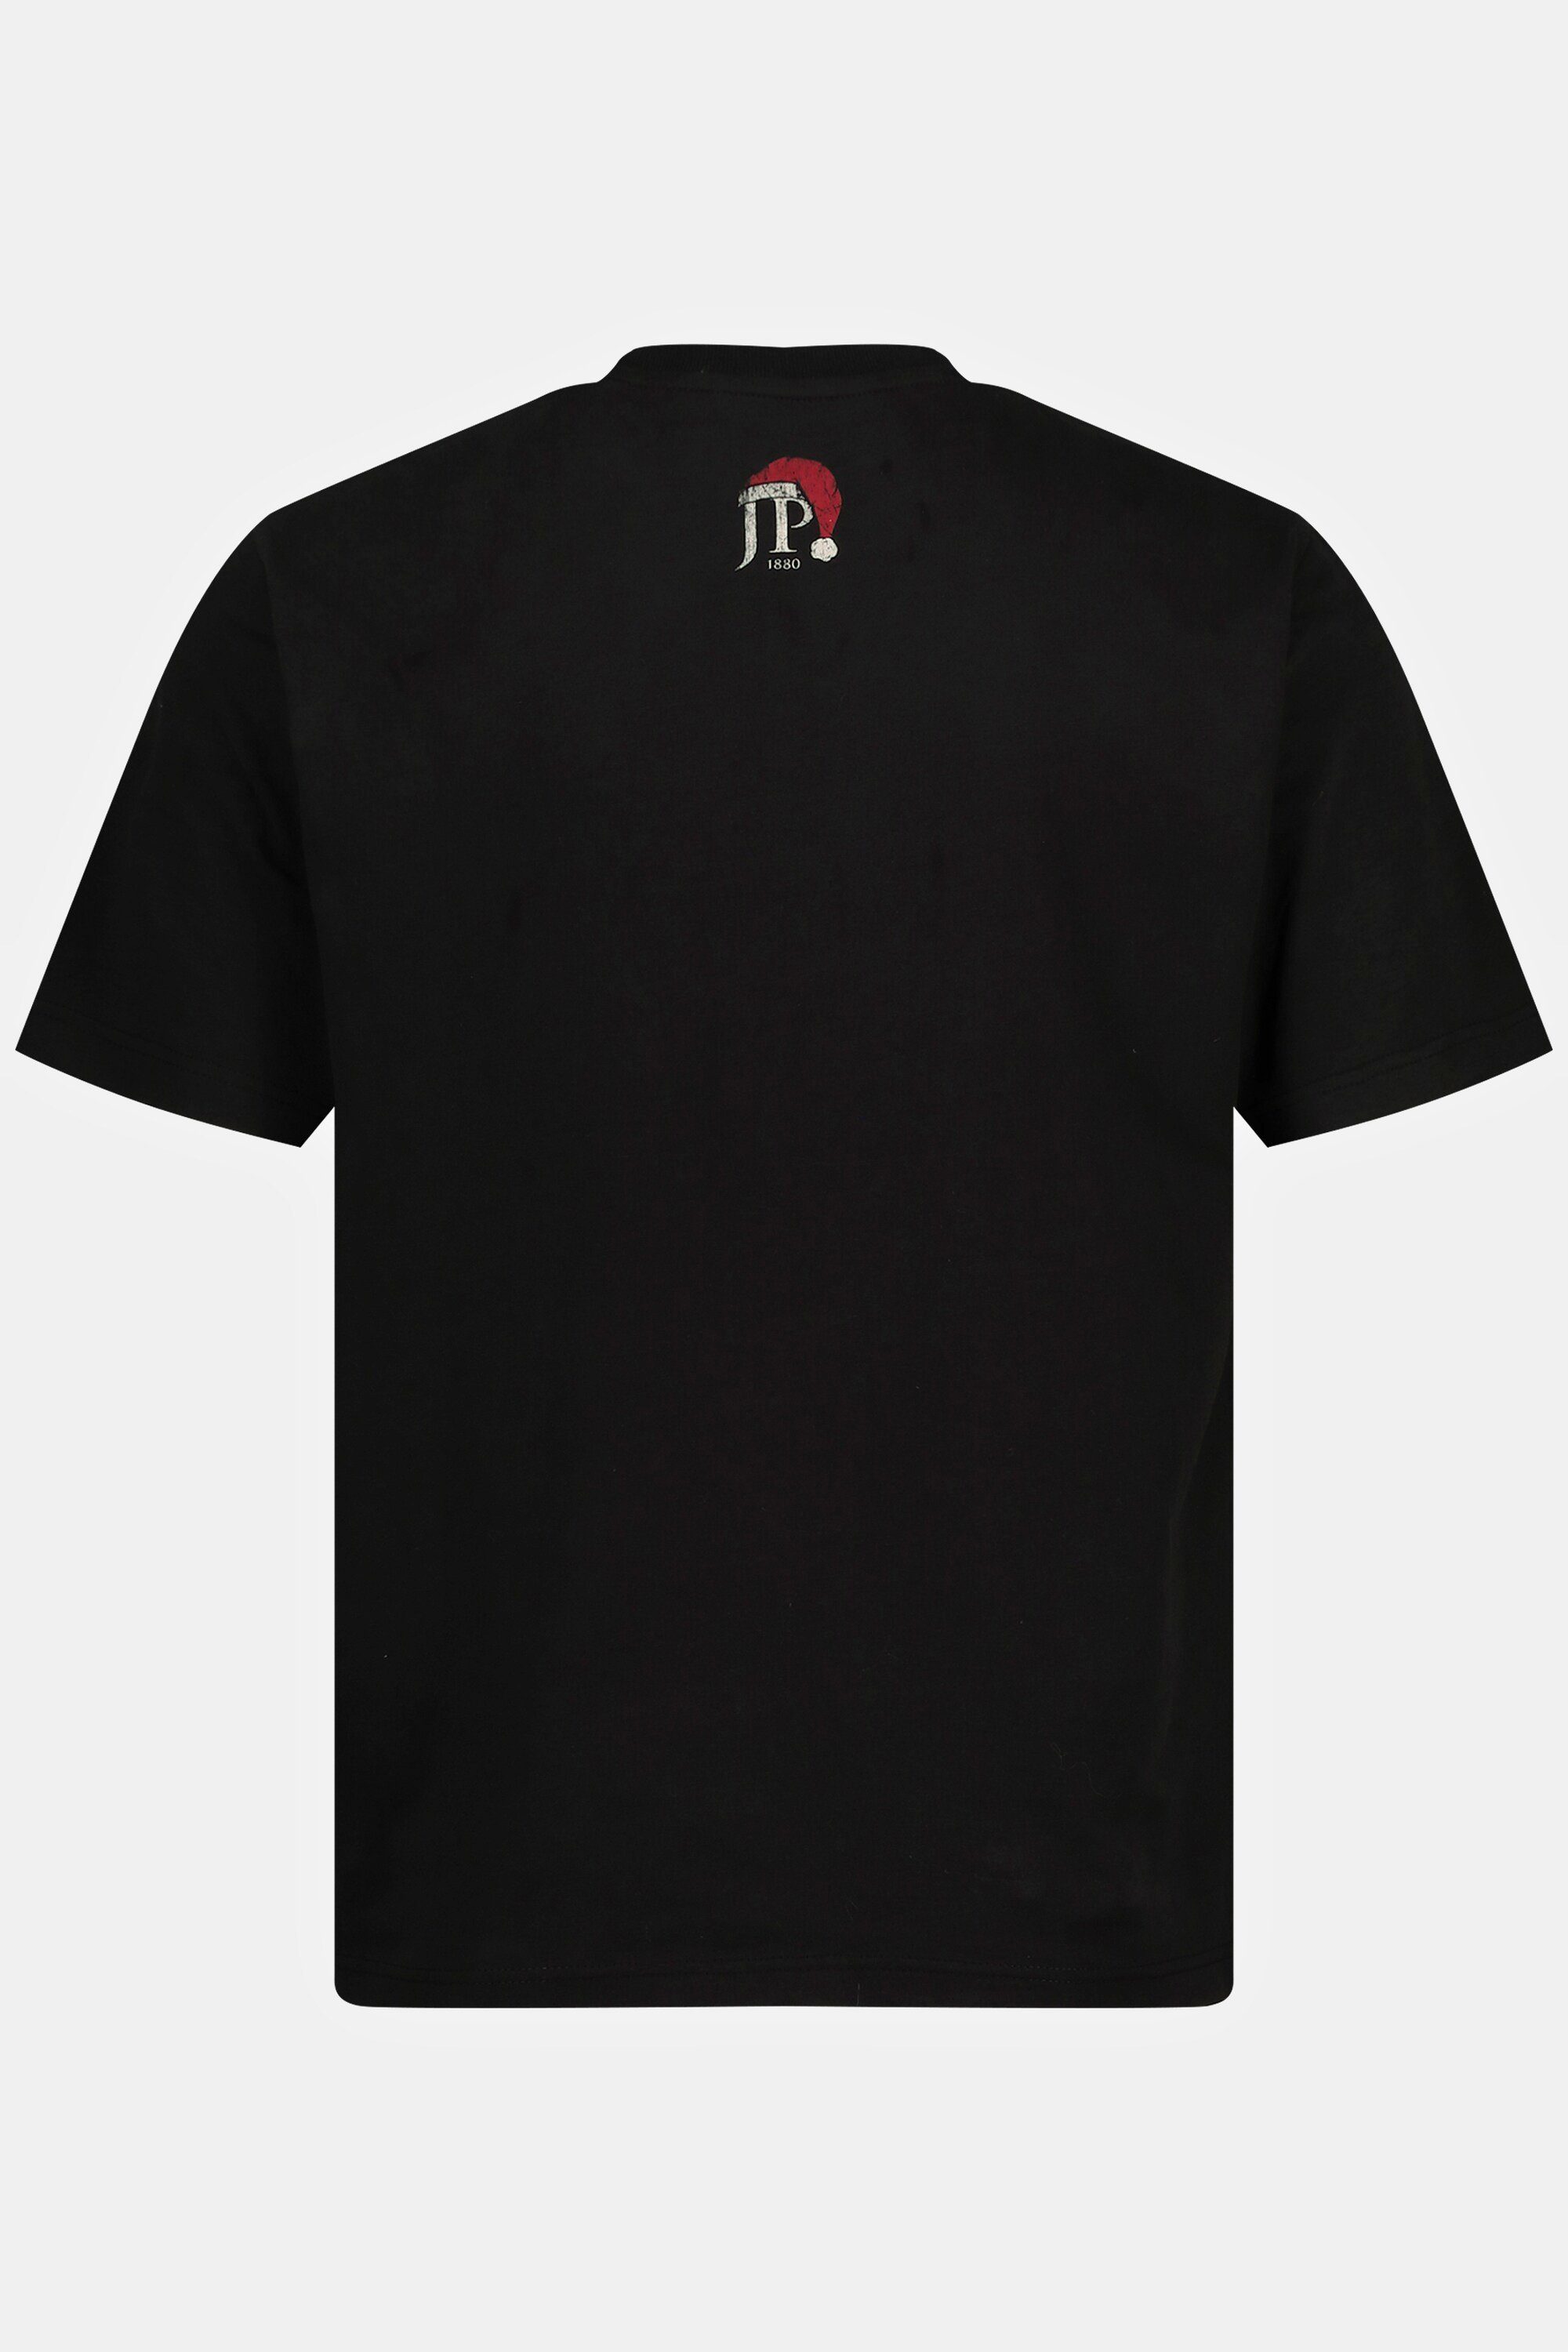 Print X-Mas JP1880 Rundhals T-Shirt Halbarm T-Shirt